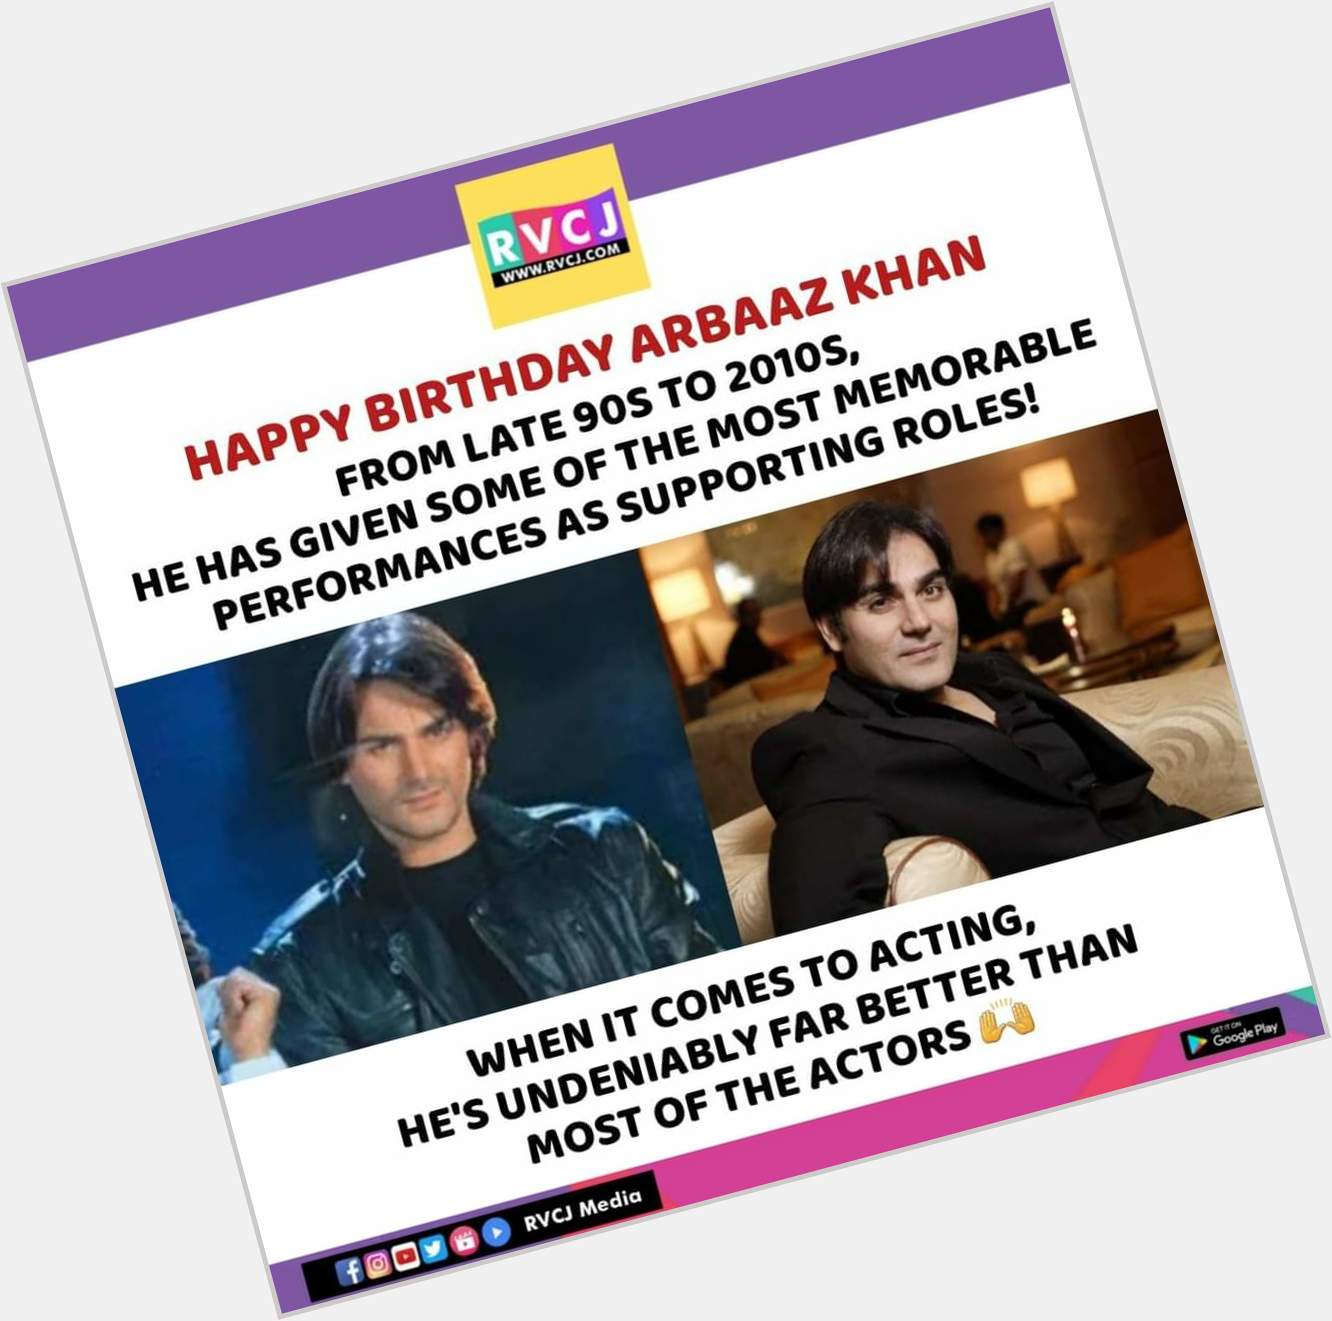 Happy birthday Arbaaz Khan 